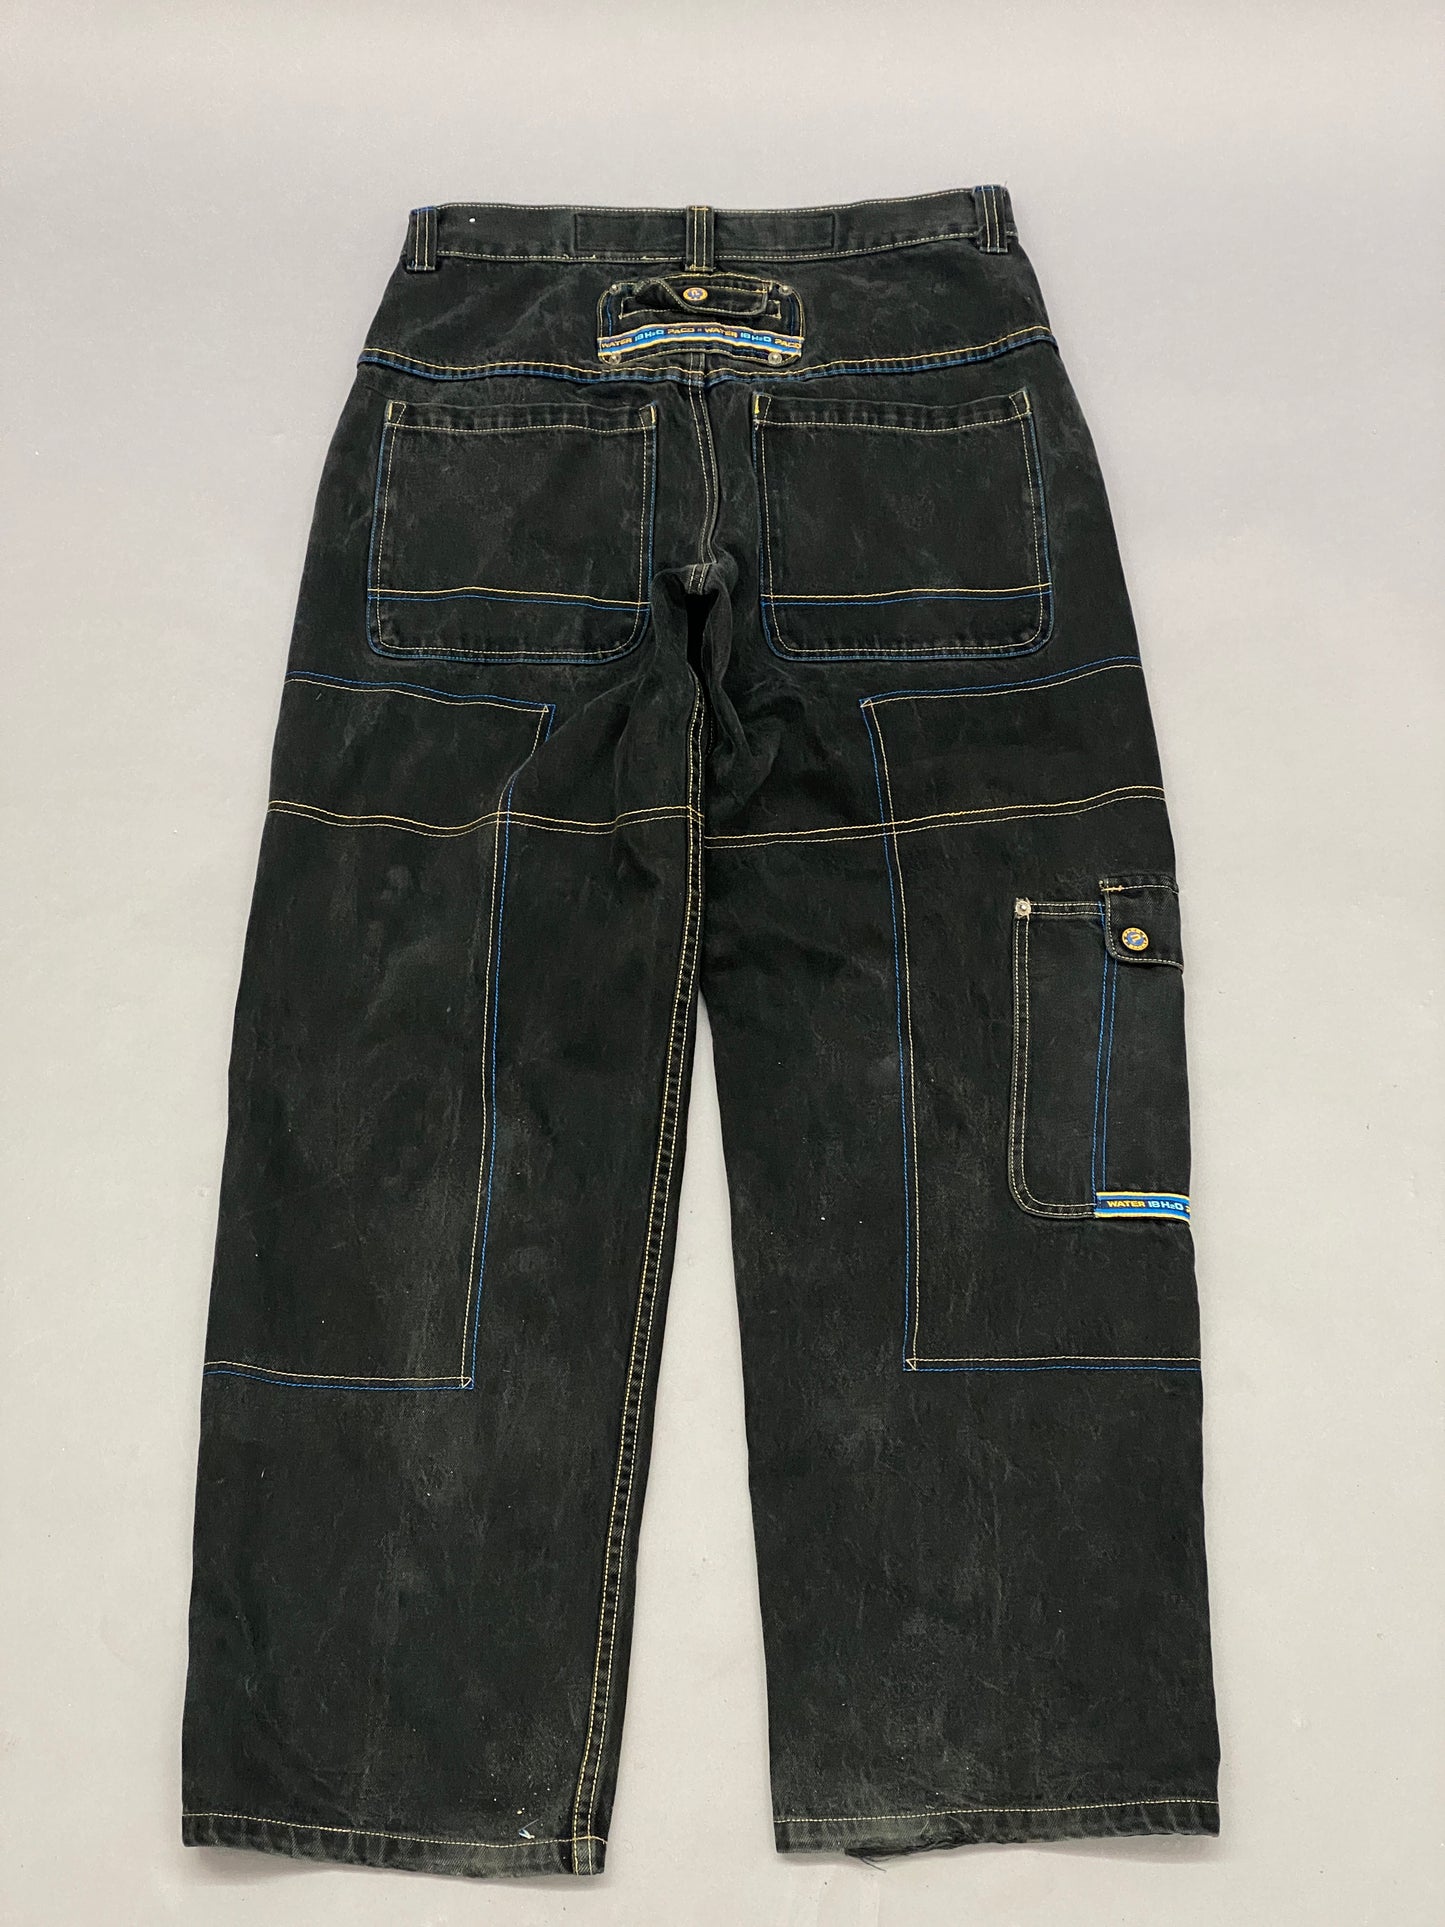 Paco Sport Multipocket Vintage Jeans - 33 x 34